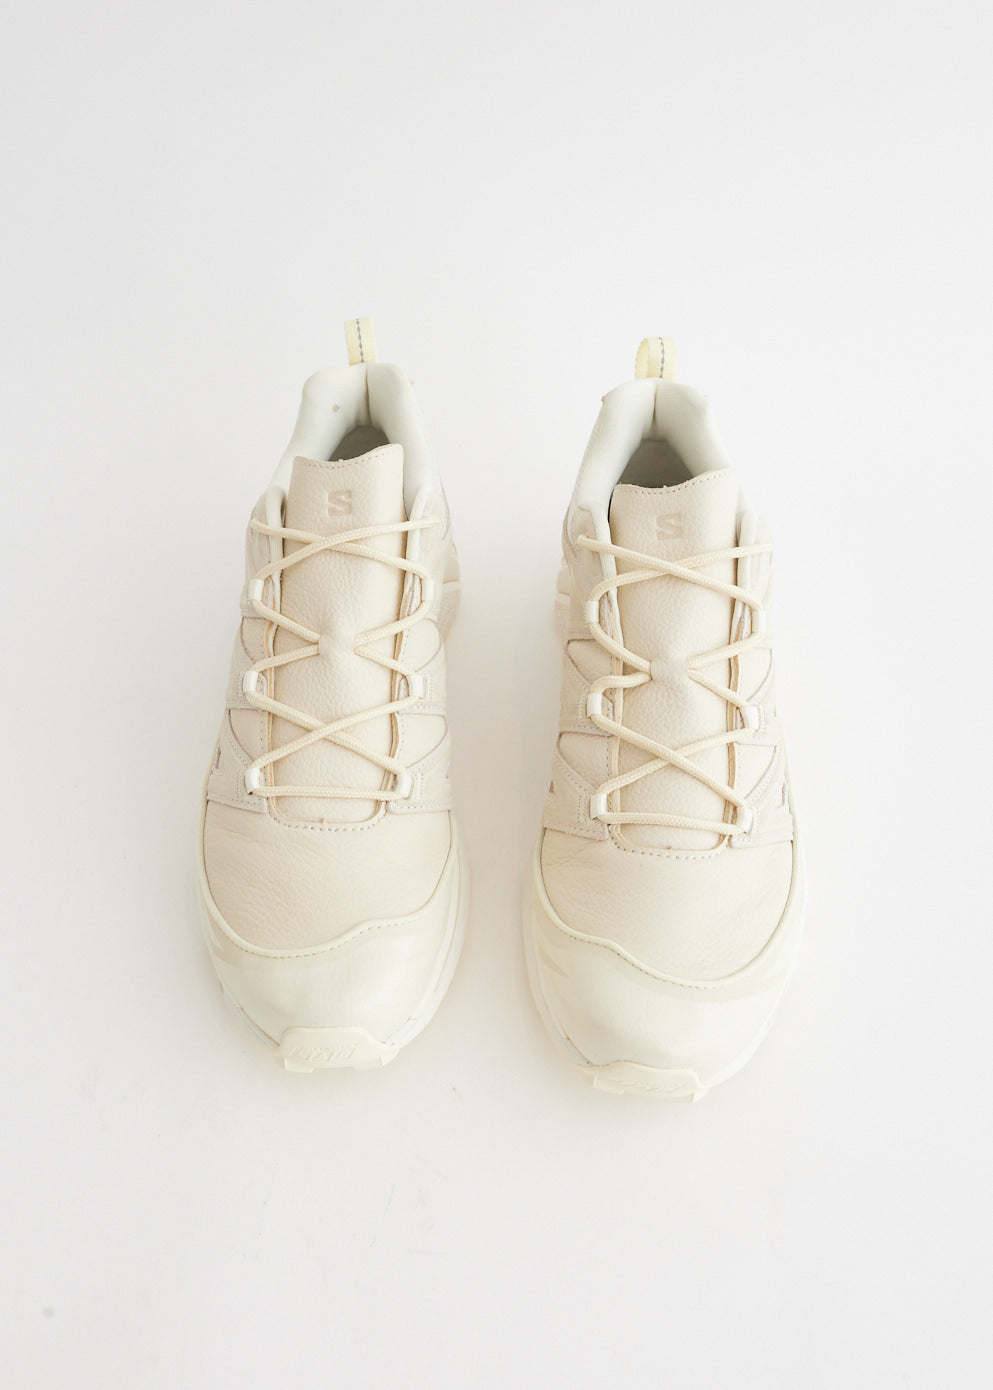 XT-6 Expanse Leather 'Vanilla Ice' Sneakers